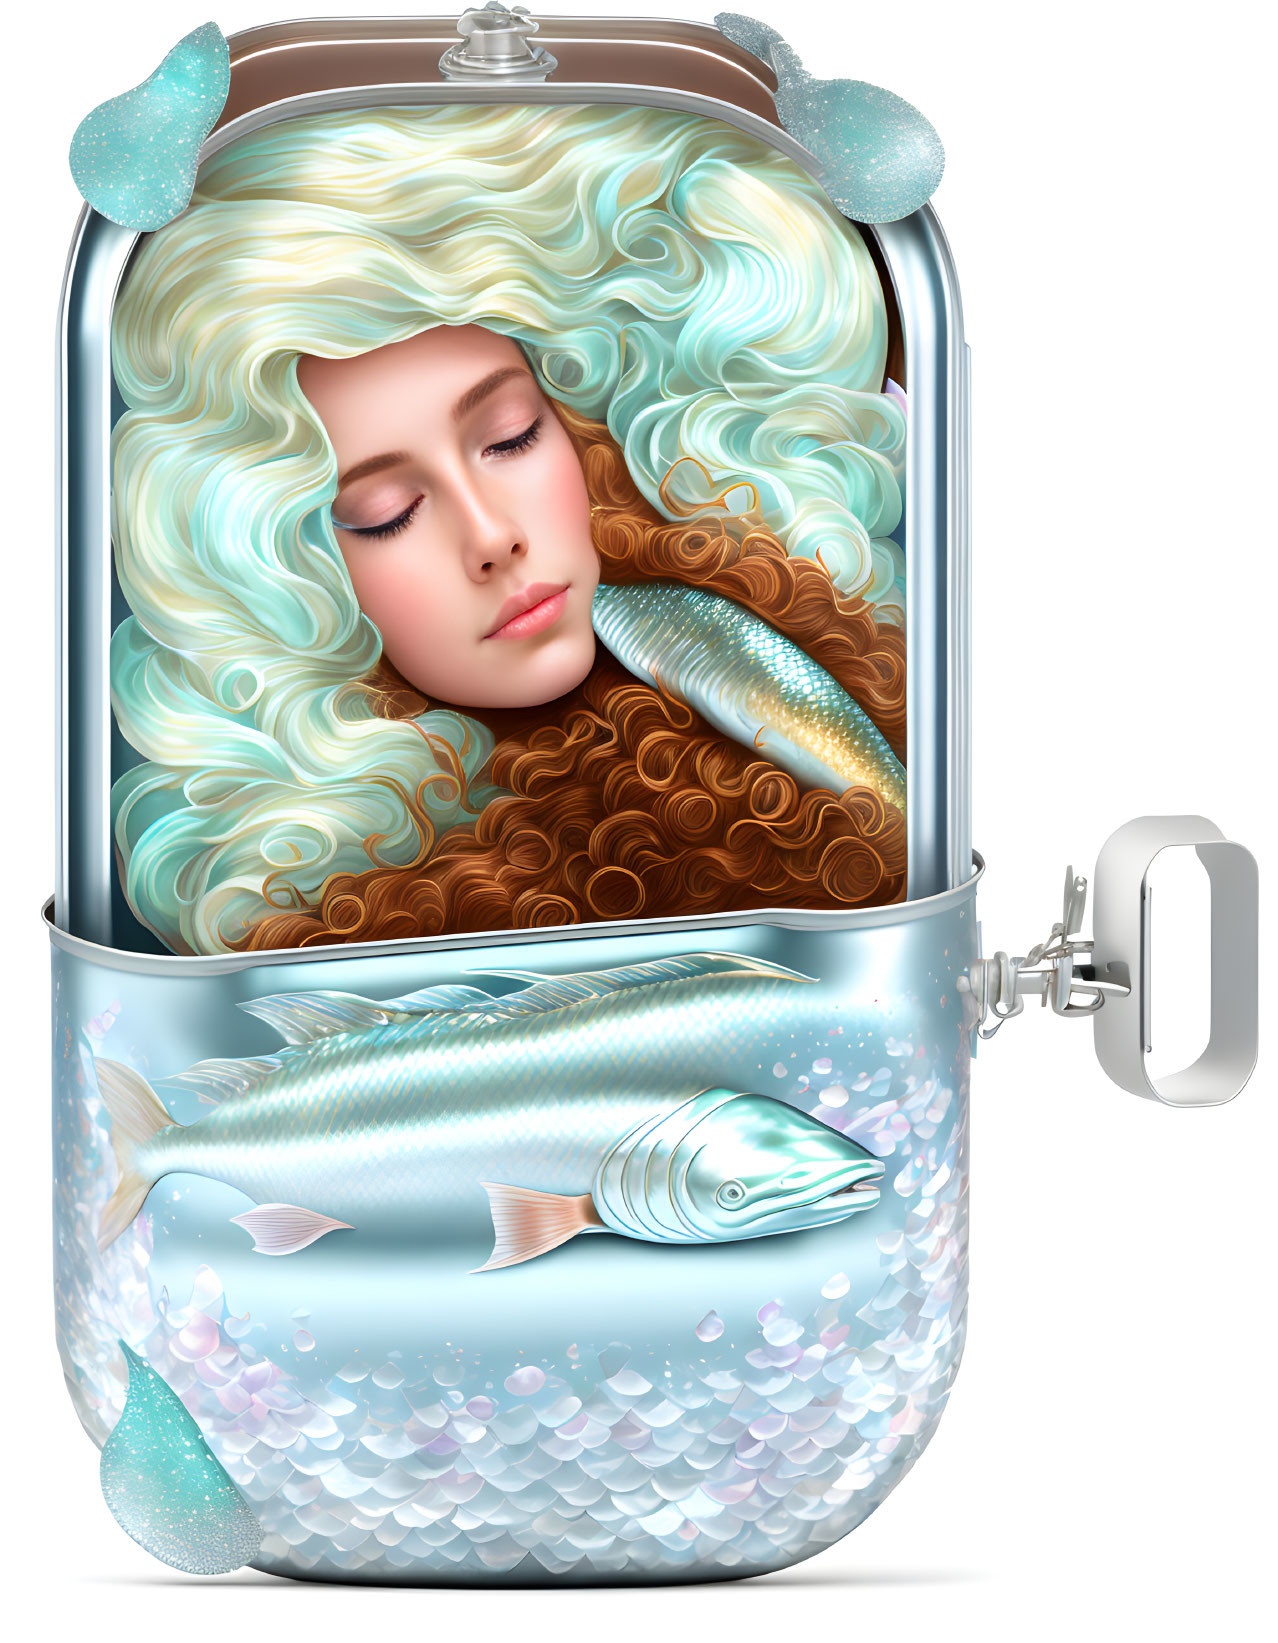 Canned Mermaid